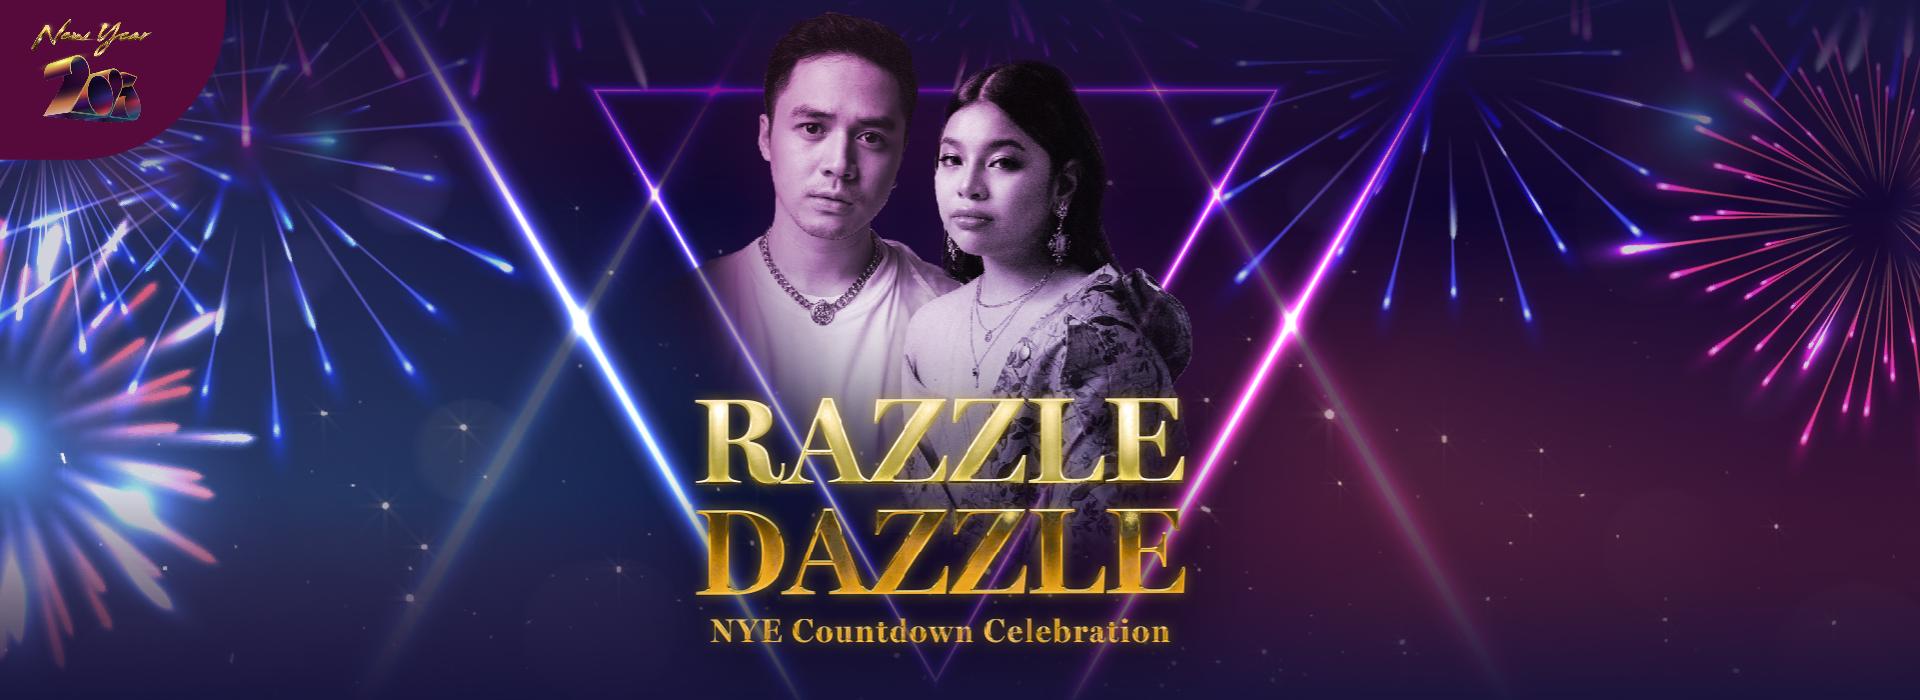 new year countdown philippines - razzle dazzle nye countdown